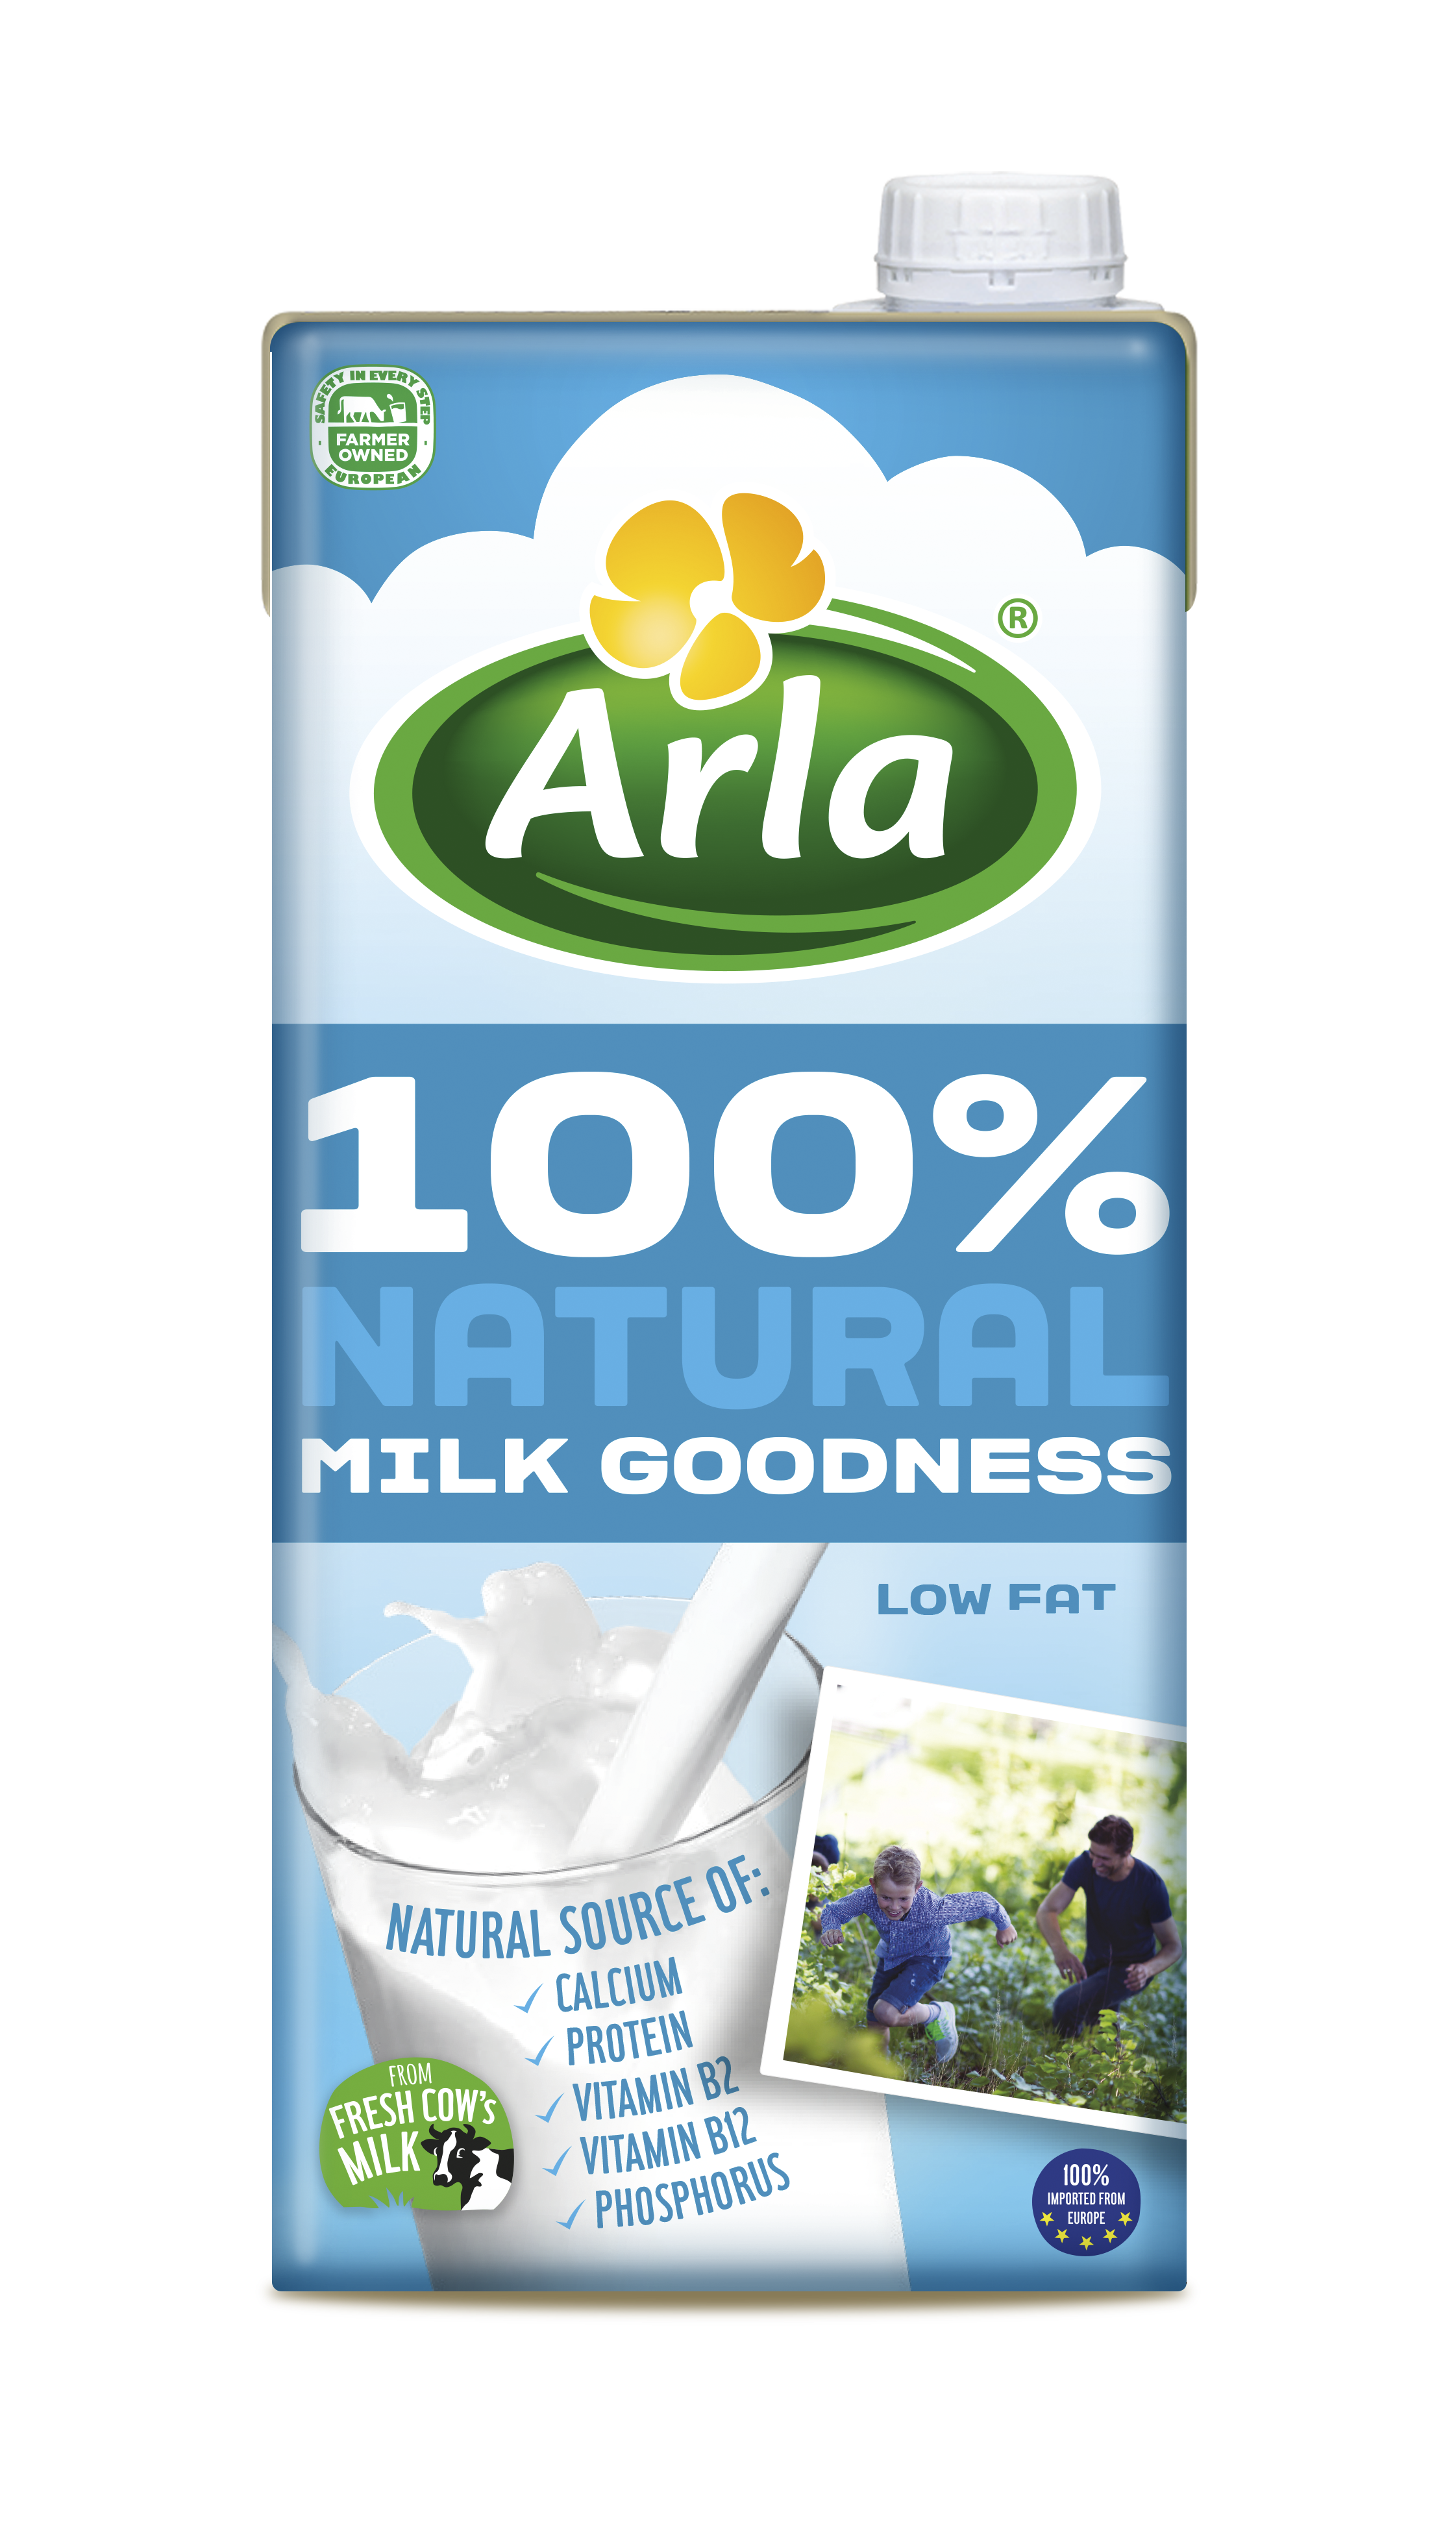 Arla 100% Natural Milk Goodness Low Fat 1 liter